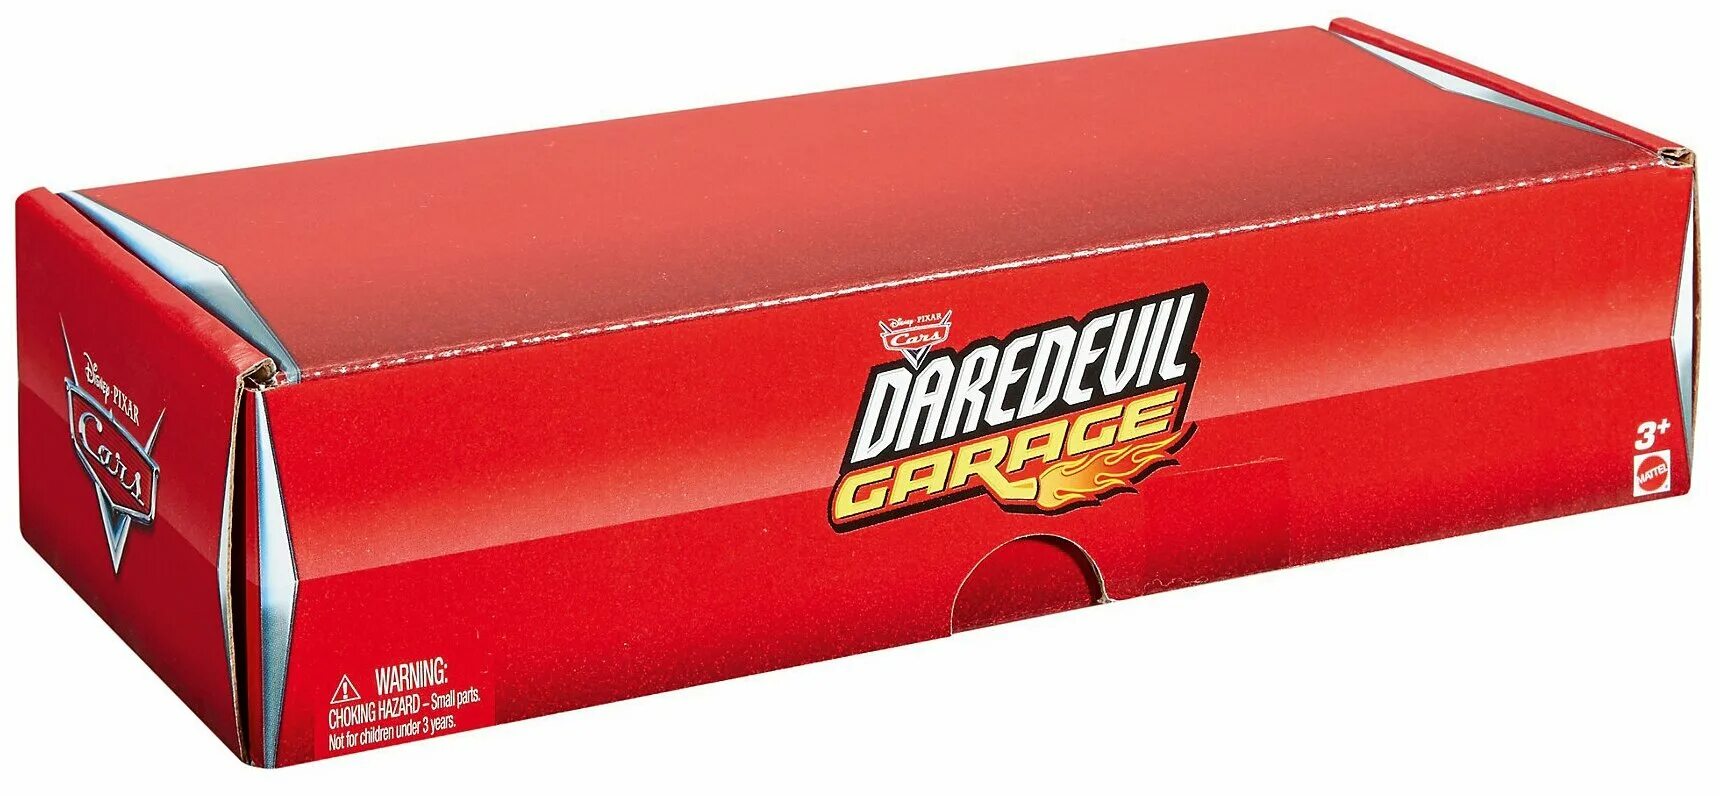 Mattel drg71 игровой набор Daredevil Garage, Тачки. Cars Daredevil Garage drg71. Cars Daredevil Garage Mattel редкие. Daredevil Garage игрушка.